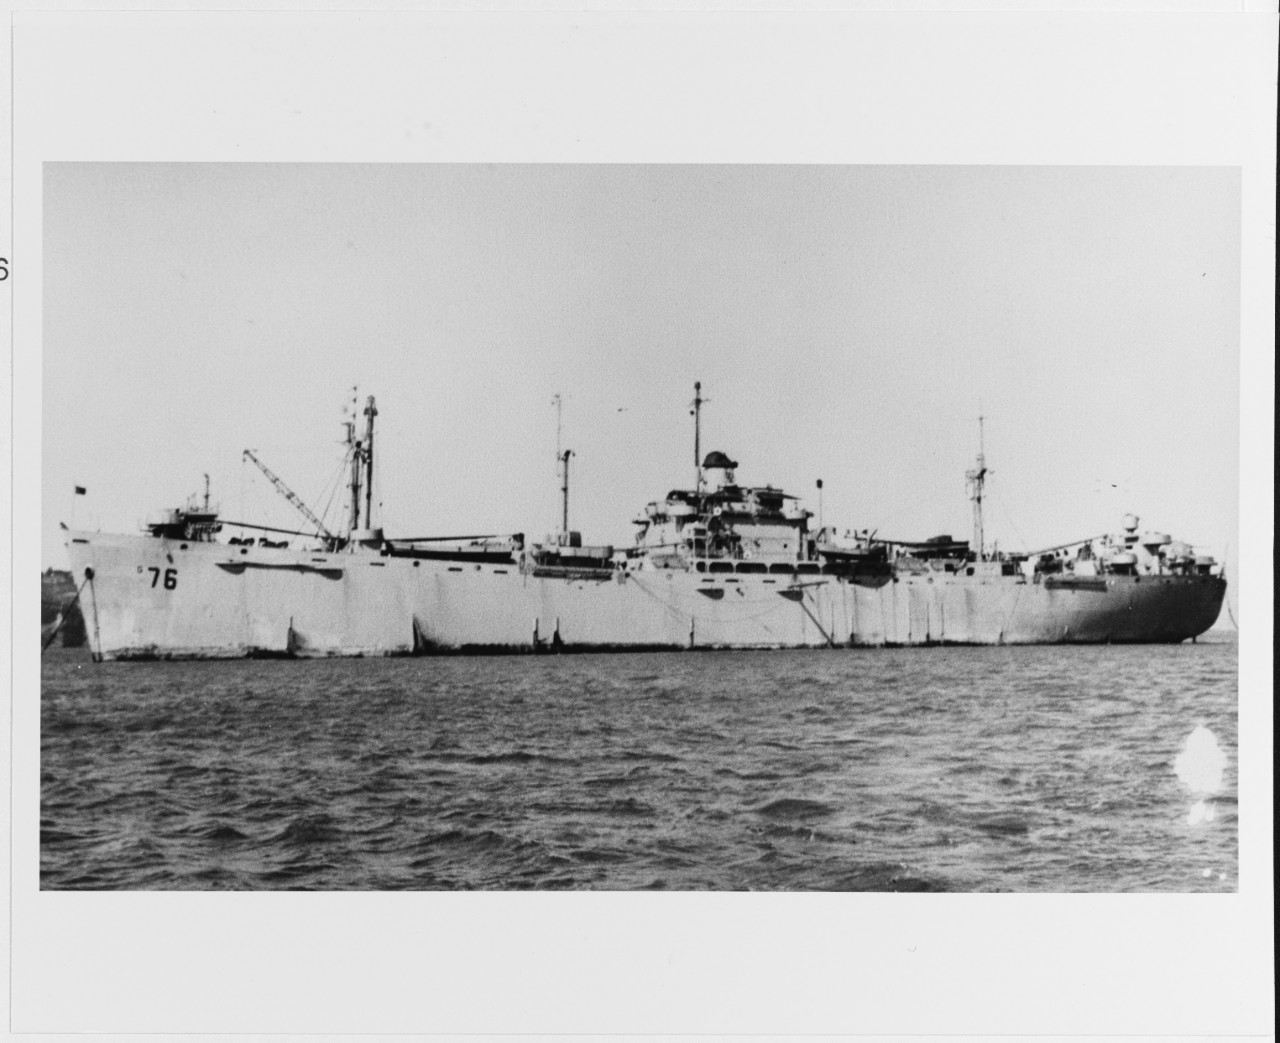 USS AVERY ISLAND (G-76)